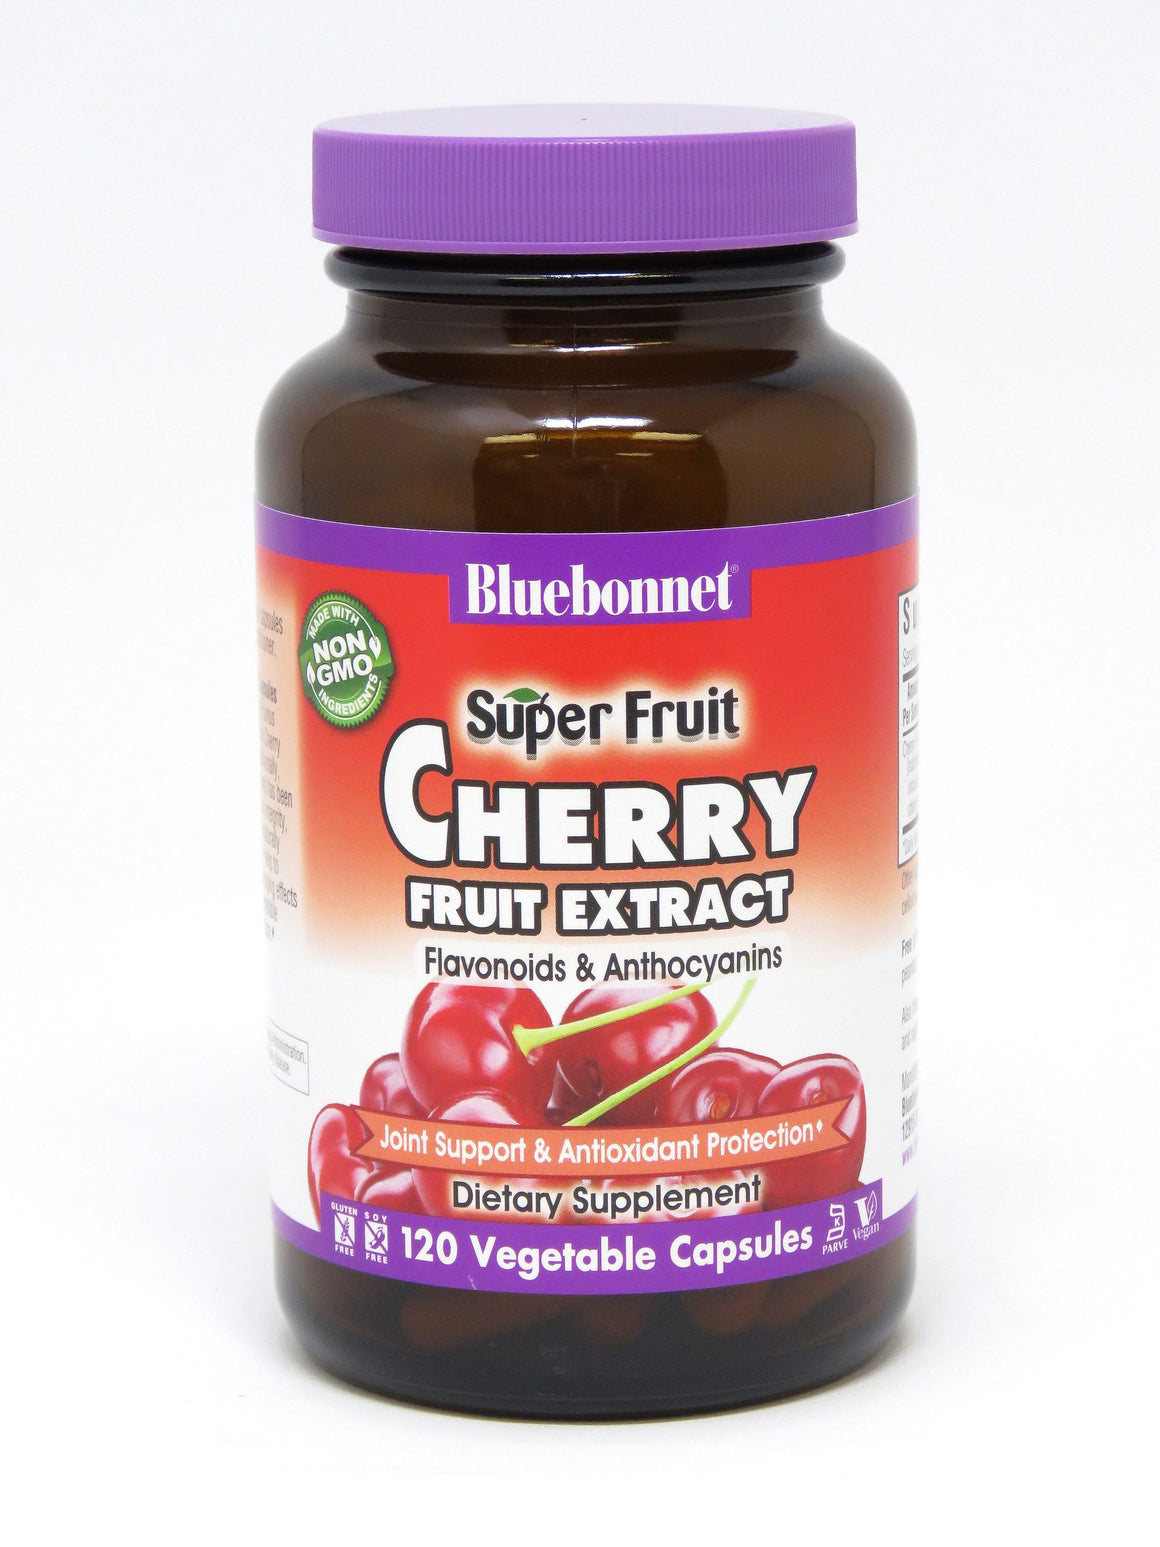 A bottle of Bluebonnet Super Fruit Cherry Fruit Extract